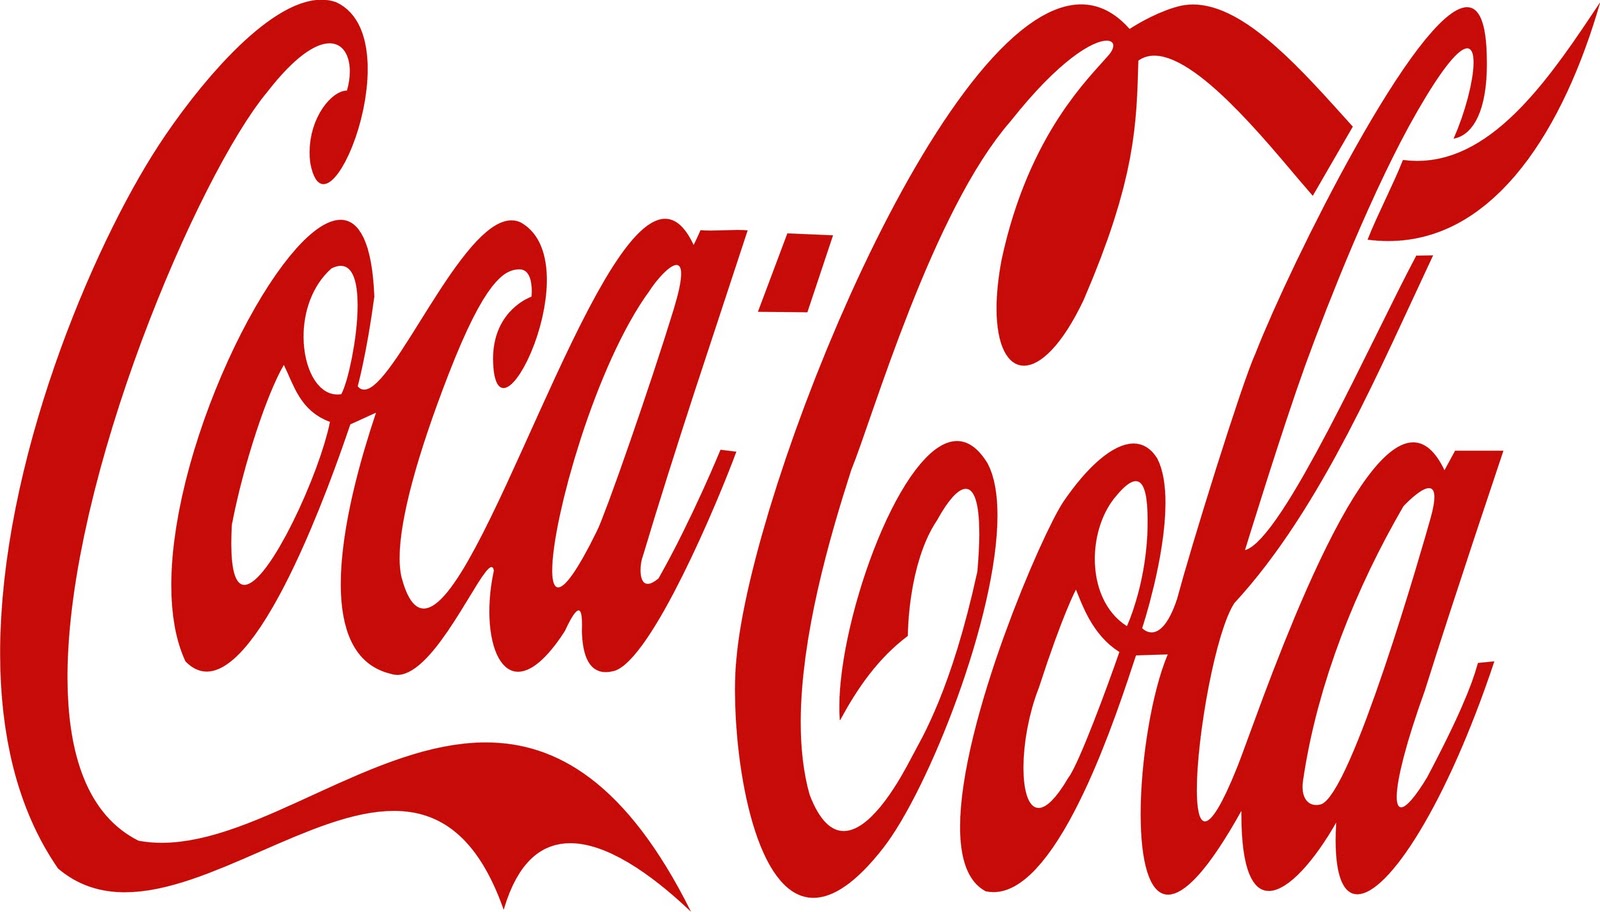 Надпись кока кола. Coca Cola надпись. Кока кола логотип. Соса сола логотип. Соса Cola лого.